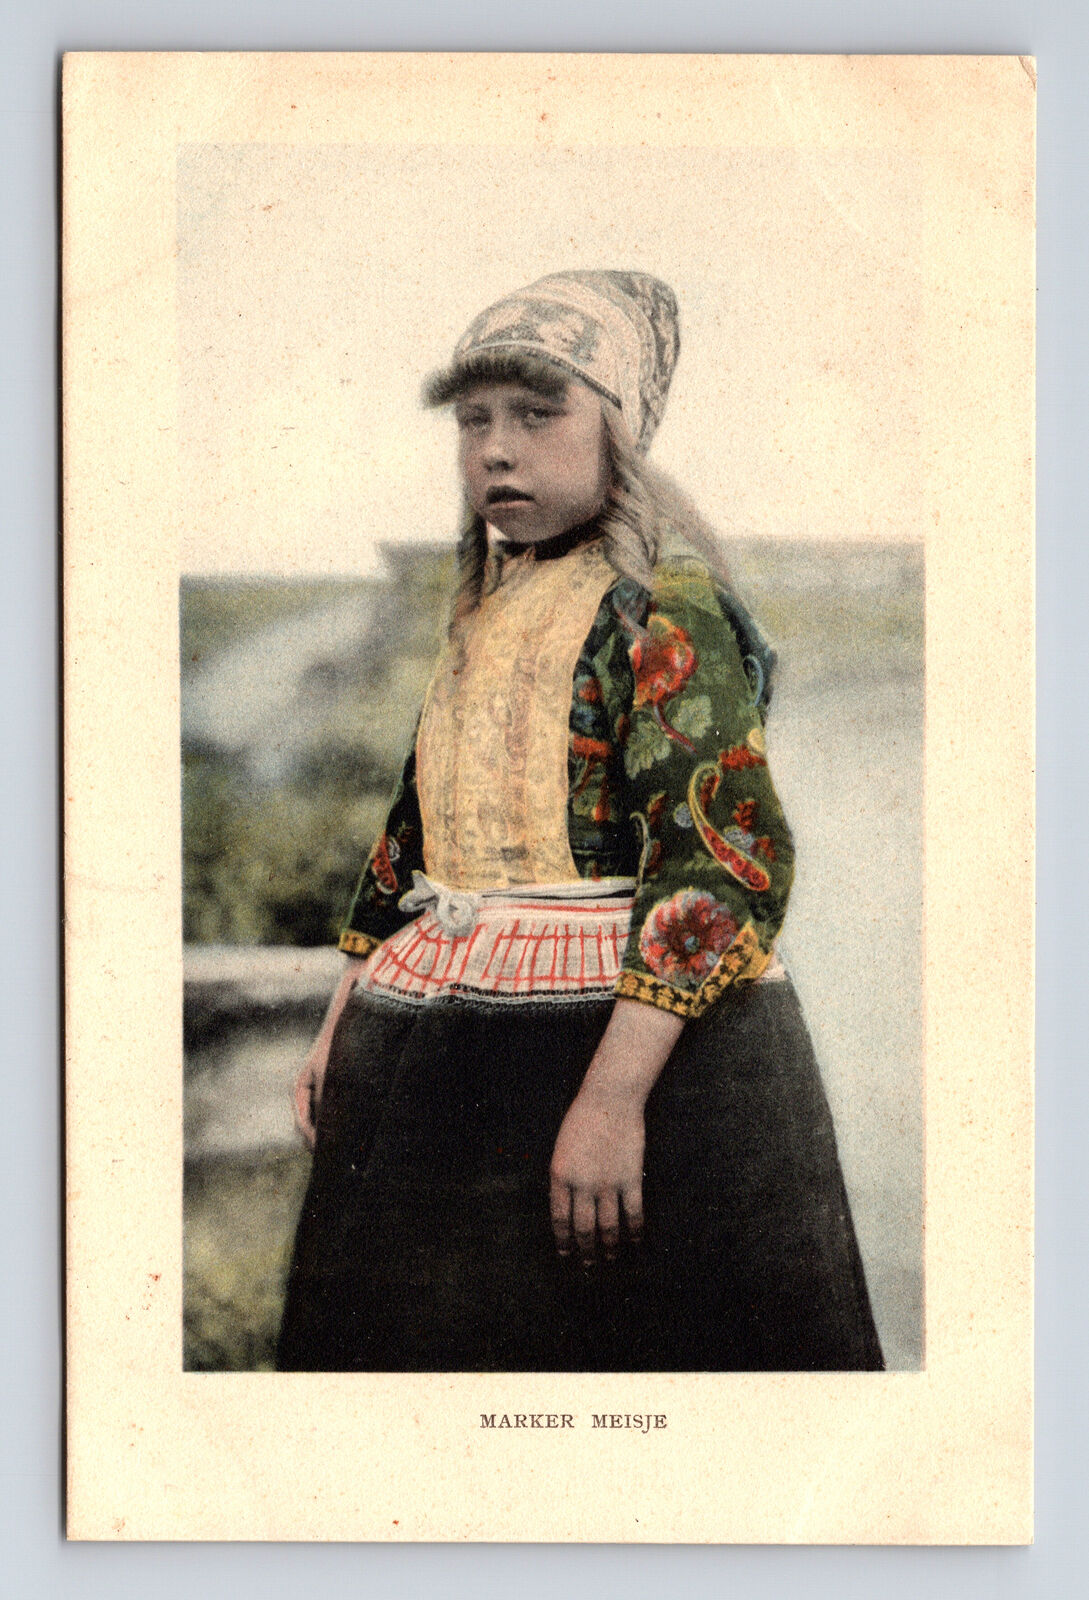 Marker Meisje Dutch Girl Traditional Dress Marken Holland Netherlands Postcard